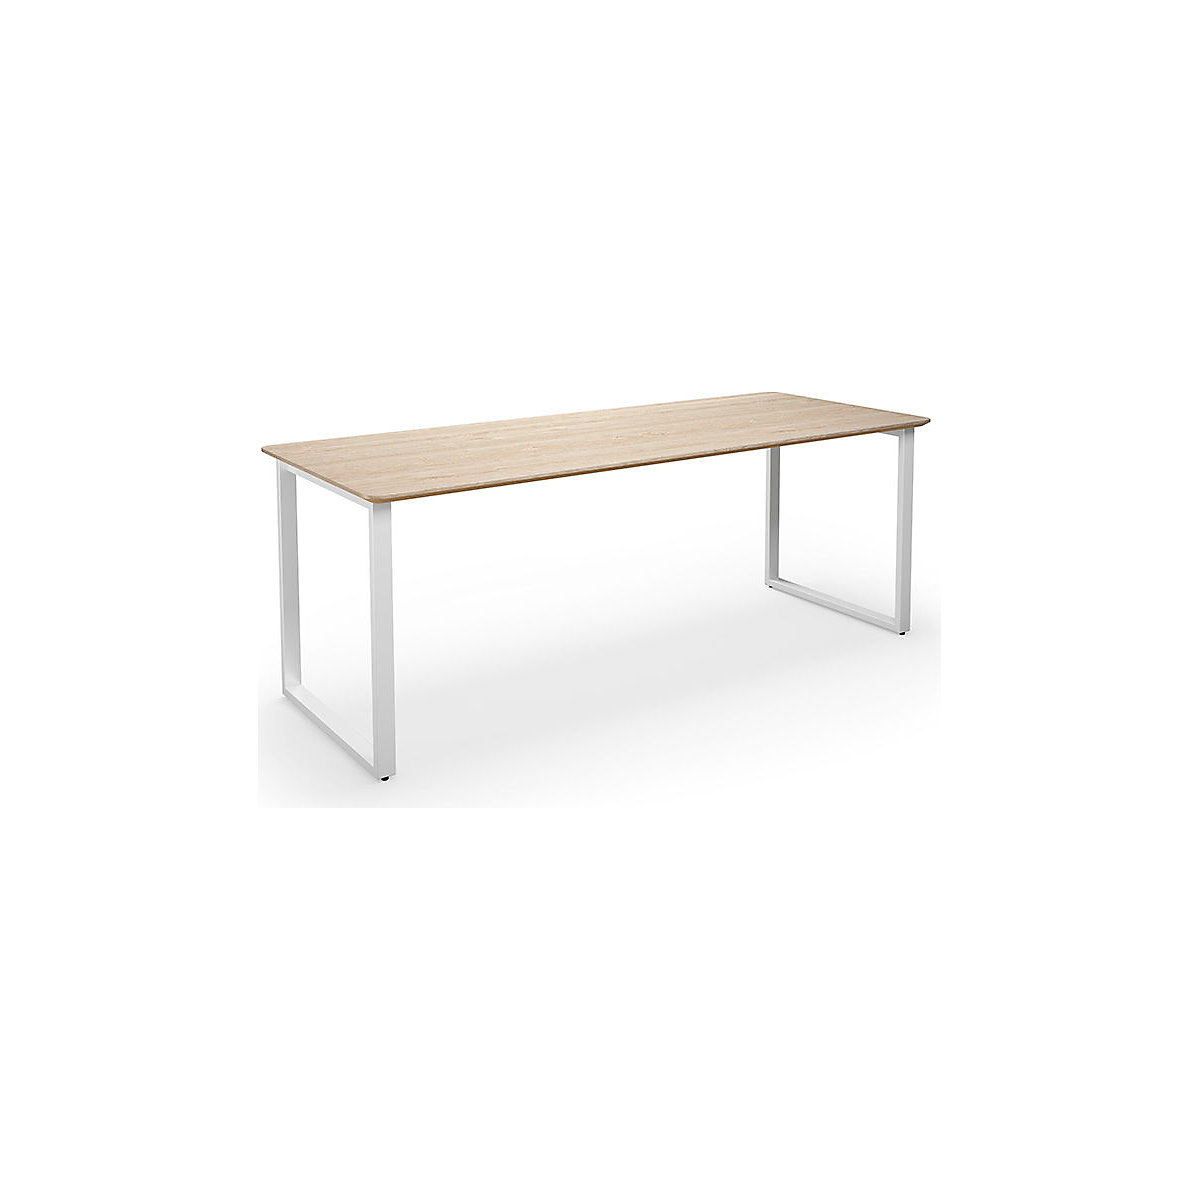 DUO-O Trend multi-purpose desk, straight tabletop, rounded corners, WxD 1800 x 800 mm, oak, white-1